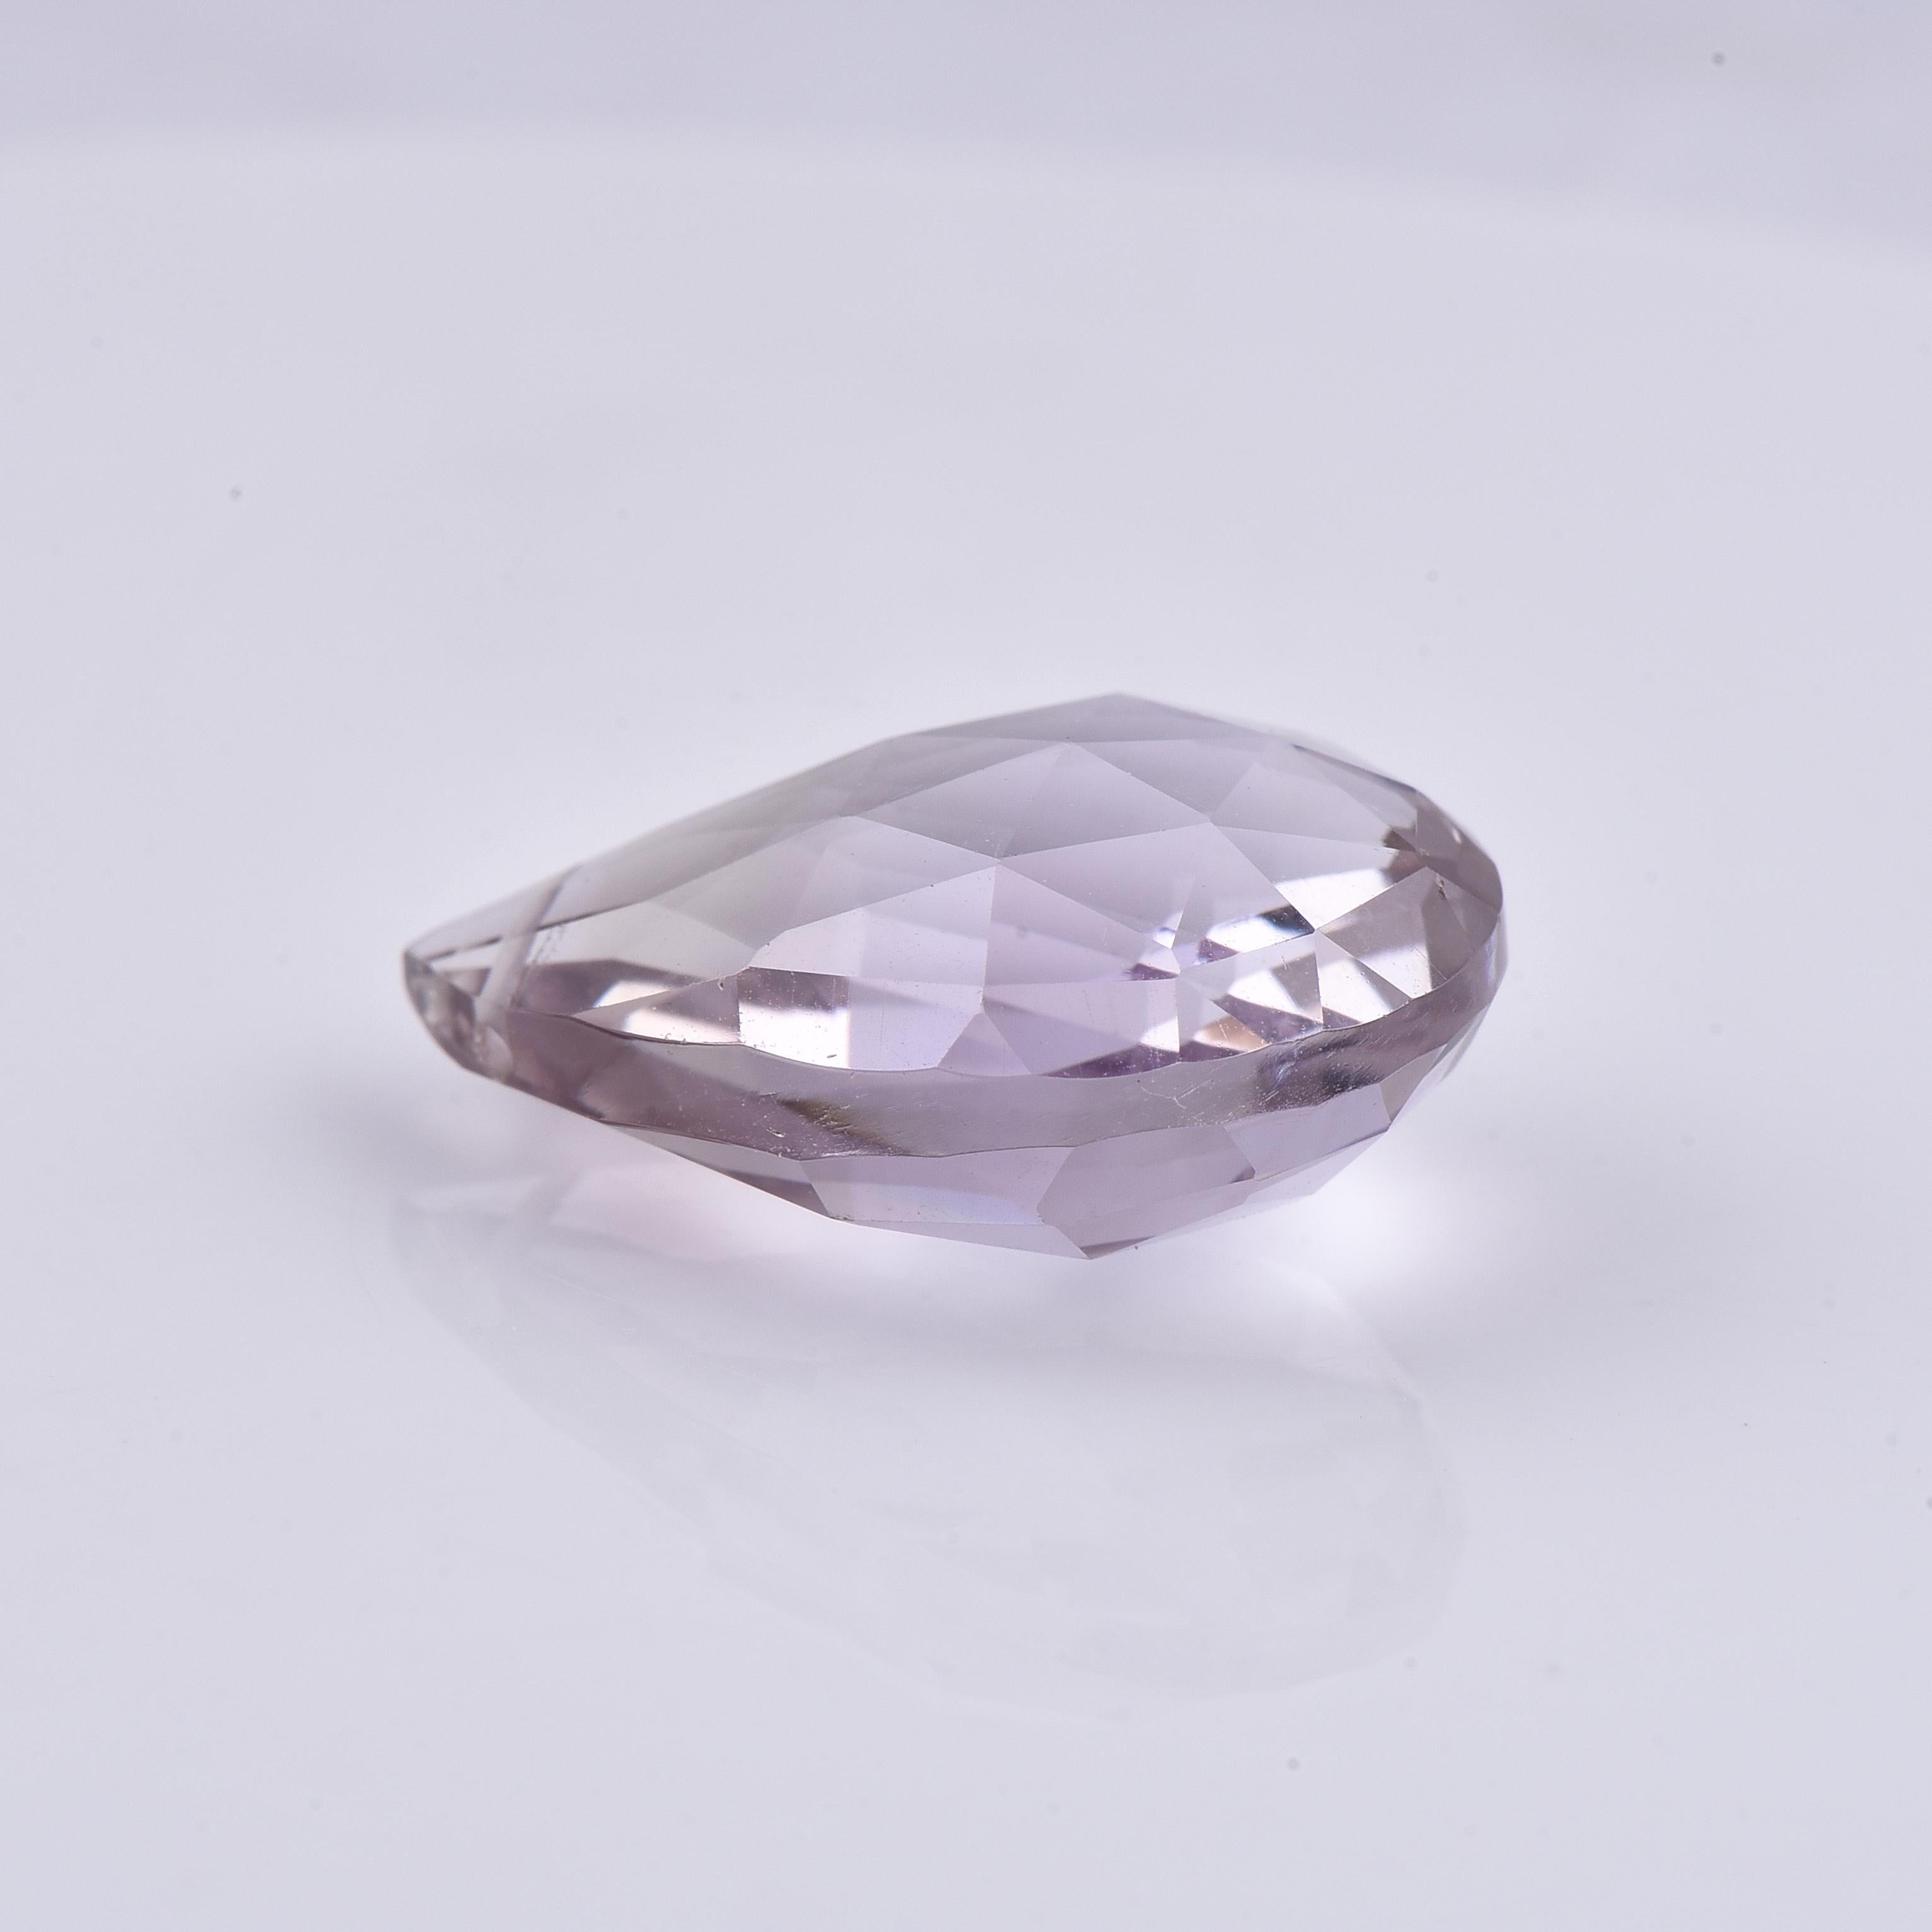 Stone Information: Natural Amethyst
Shape/Cut: Pear Shape
Color: Reddish Purple/Purple
Dimensions (mm): 18.88 x 12.88 x 8.26
Weight: 11.55ct